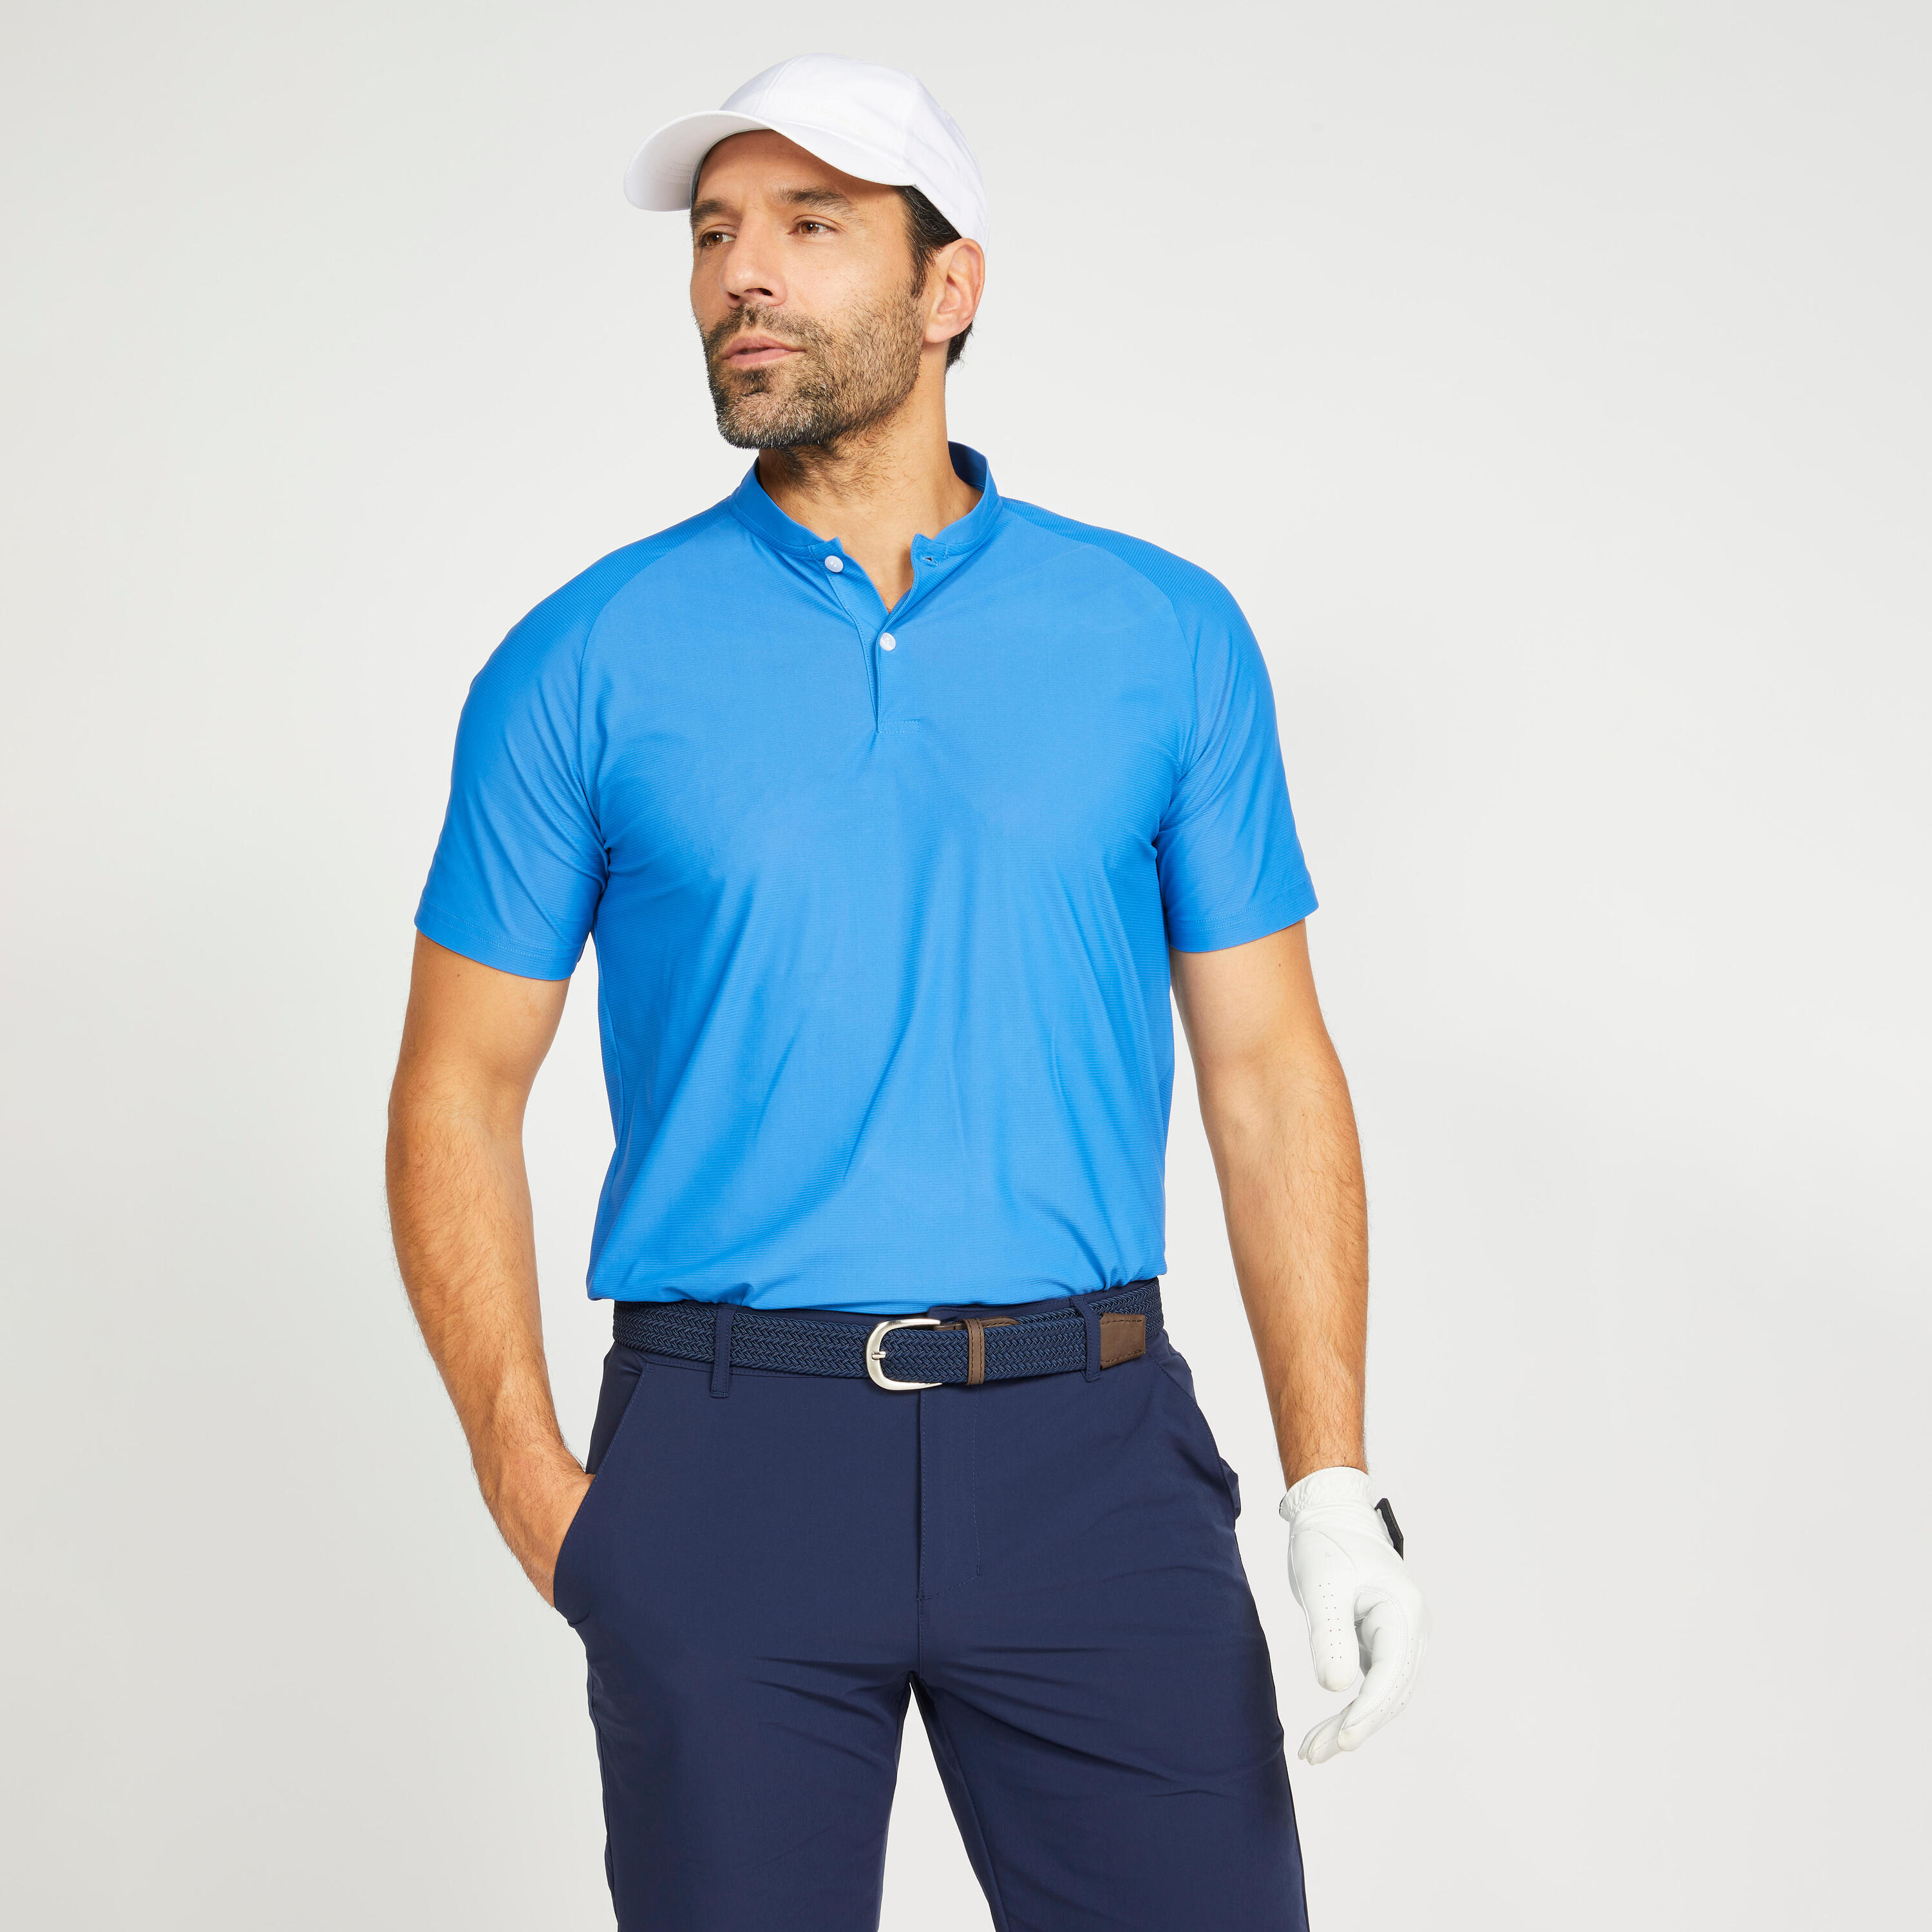 INESIS Men's golf short sleeve polo shirt - WW500 blue